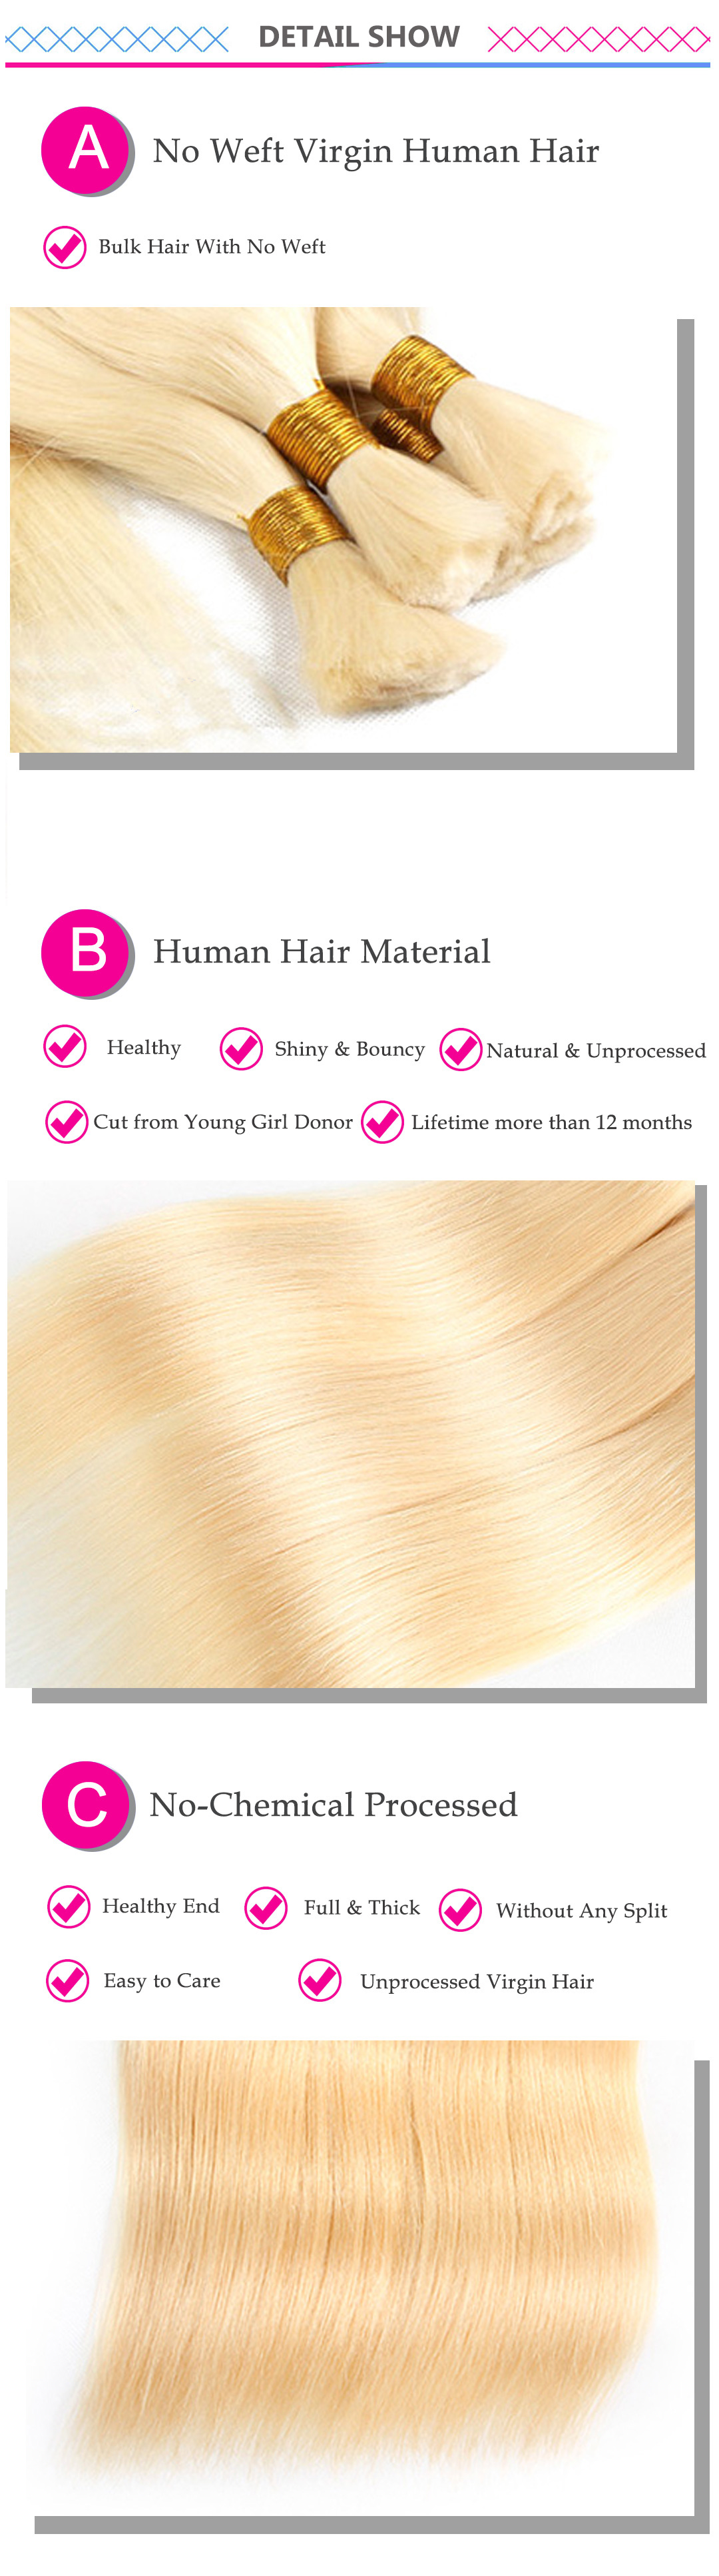 Gluna Bulk Human Hair For Braiding 3 Bundles Free Shipping 8 30